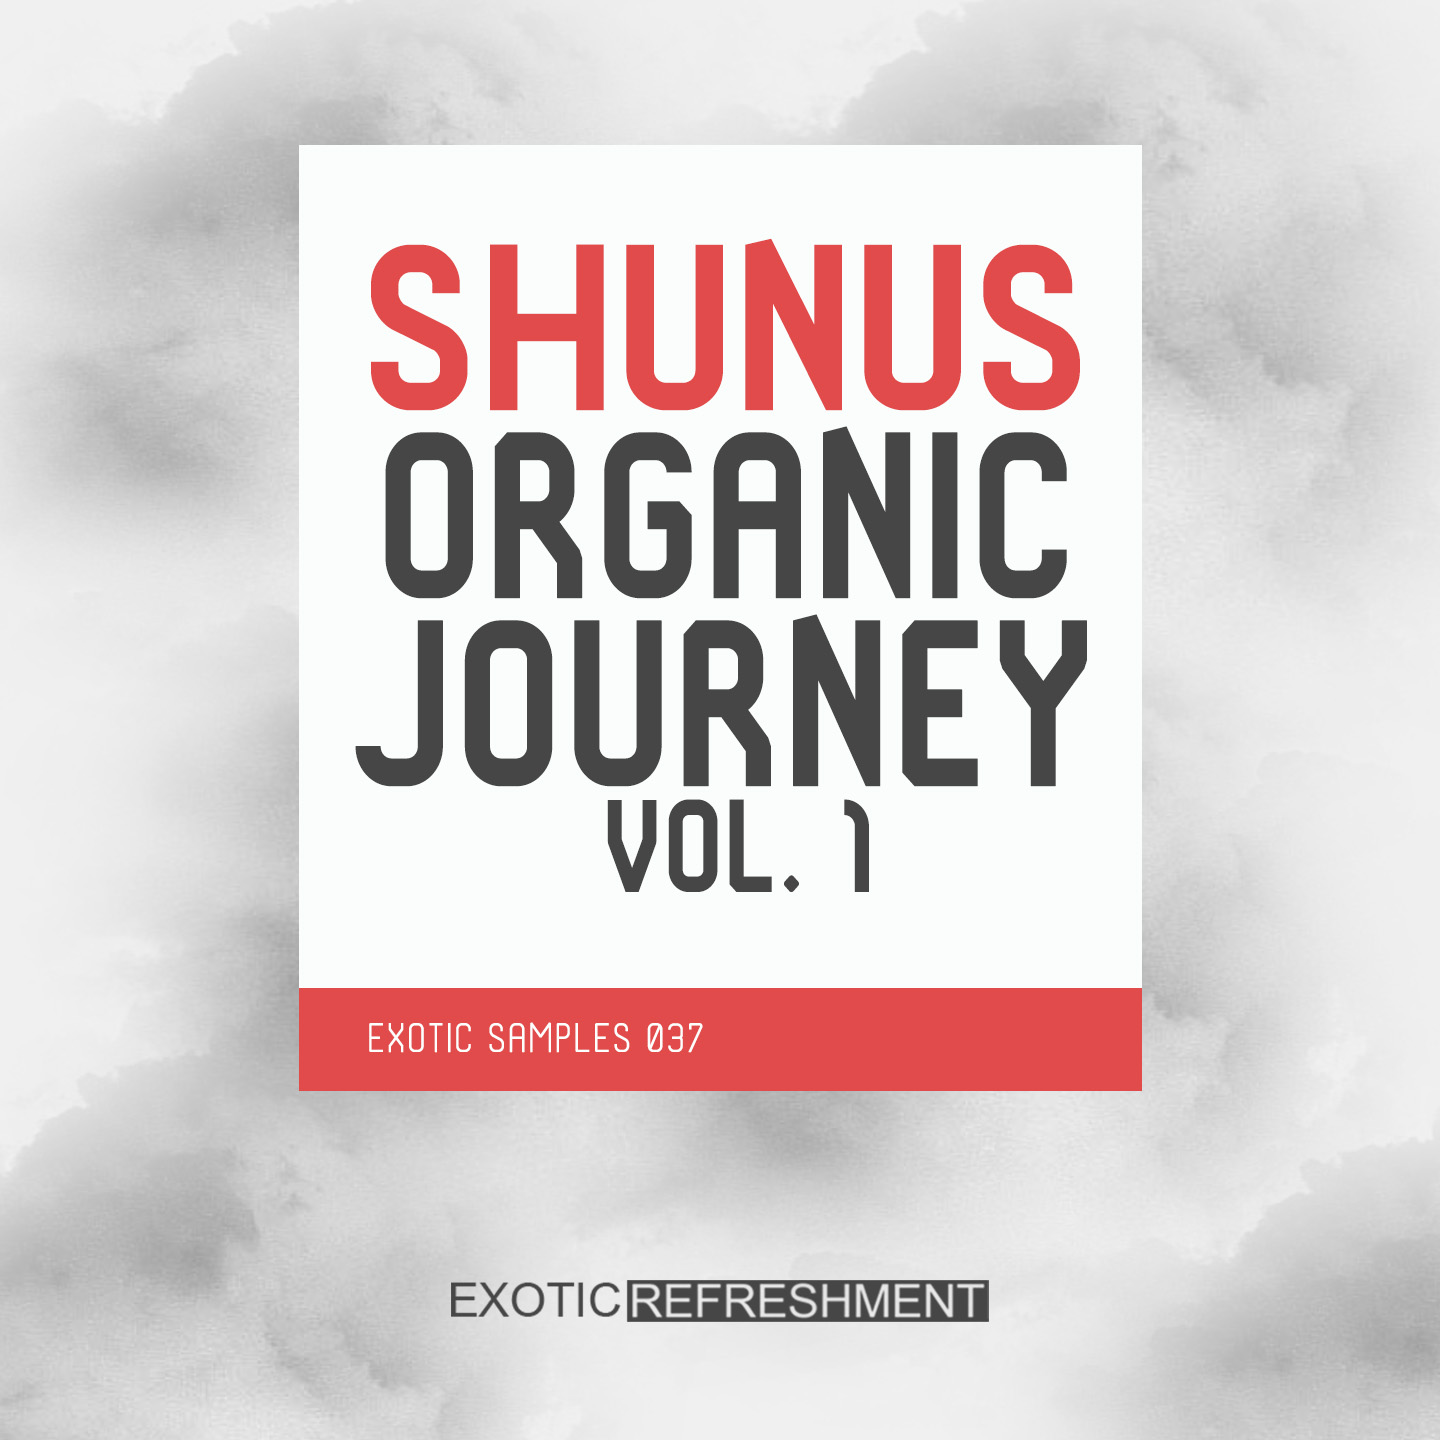 Shunus Organic Journey vol. 1